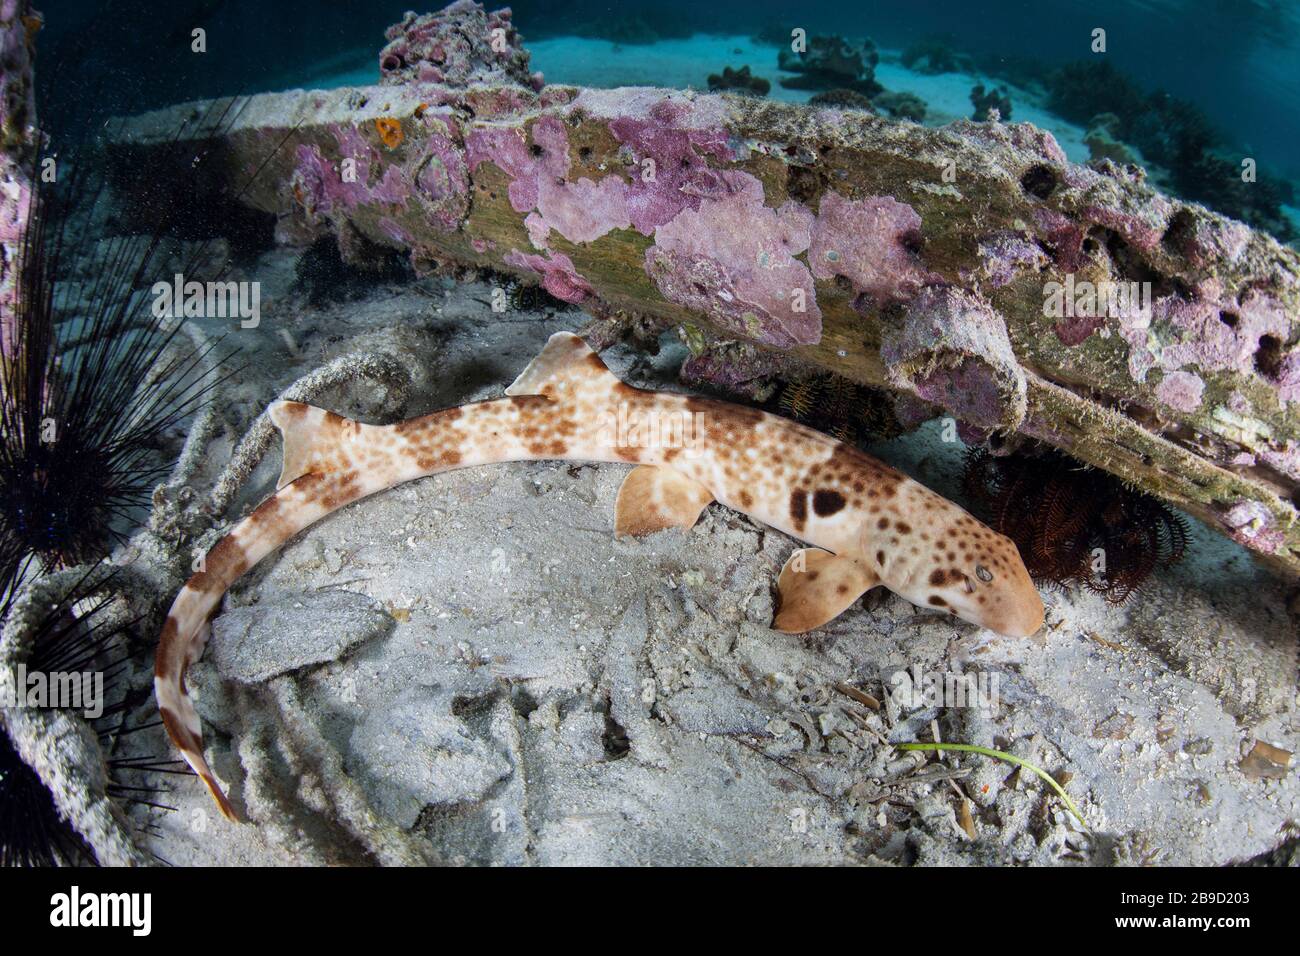 A walking epaulette shark, Hemiscyllium freycineti, crawls across the seafloor. Stock Photo